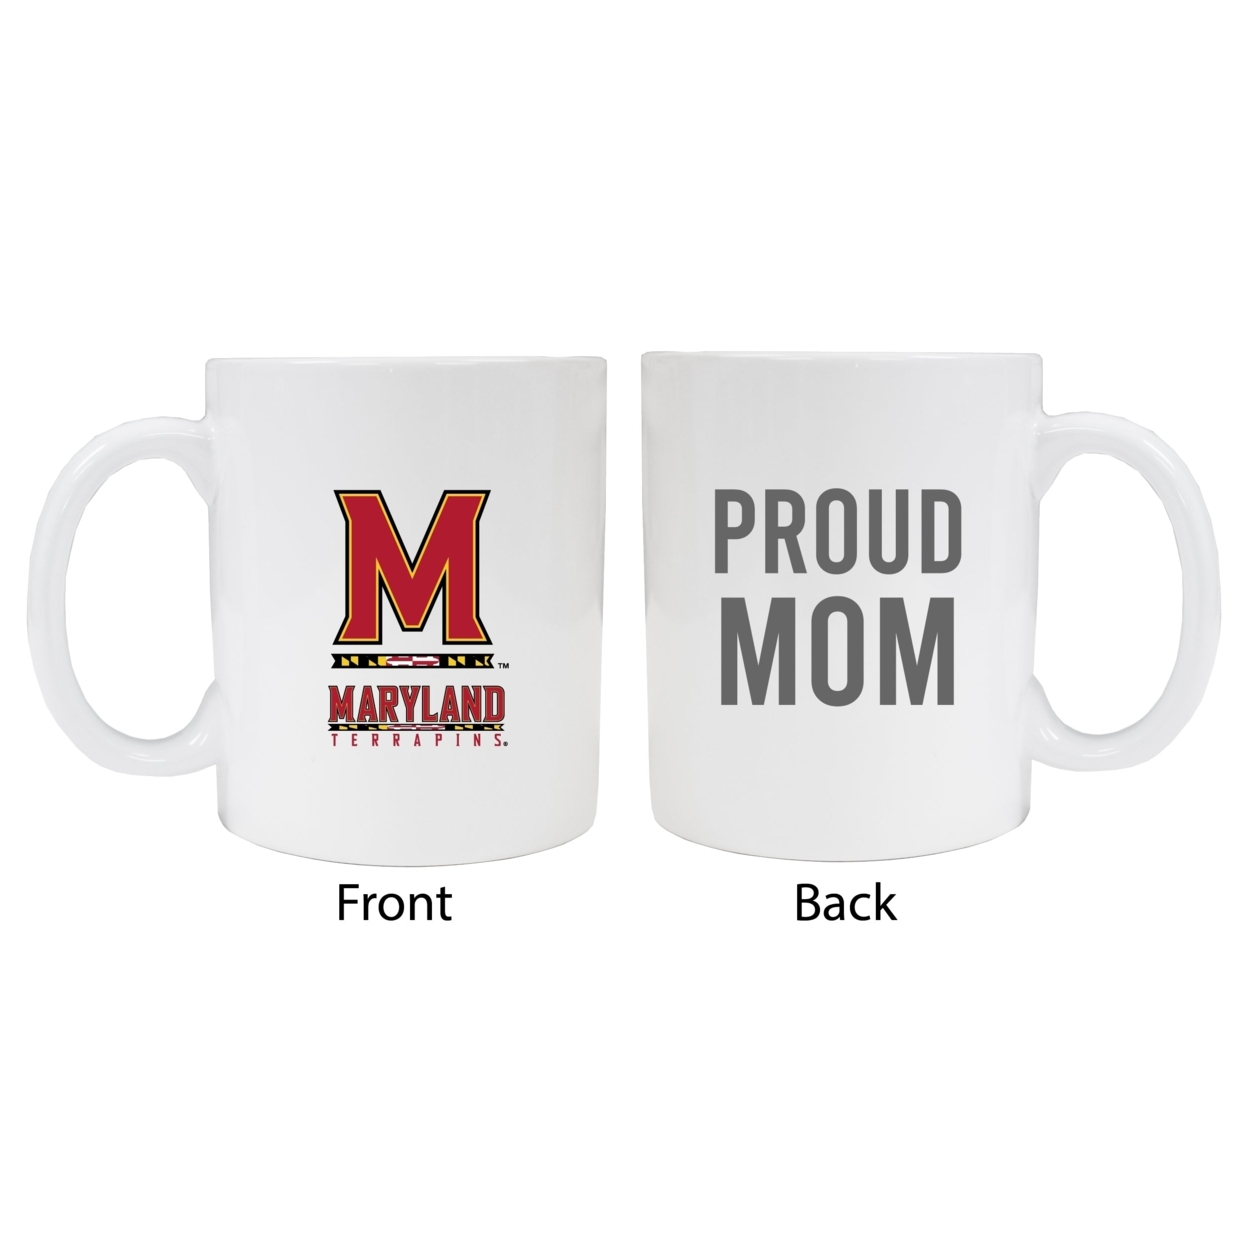 Maryland Terrapins Proud Mom Ceramic Coffee Mug - White